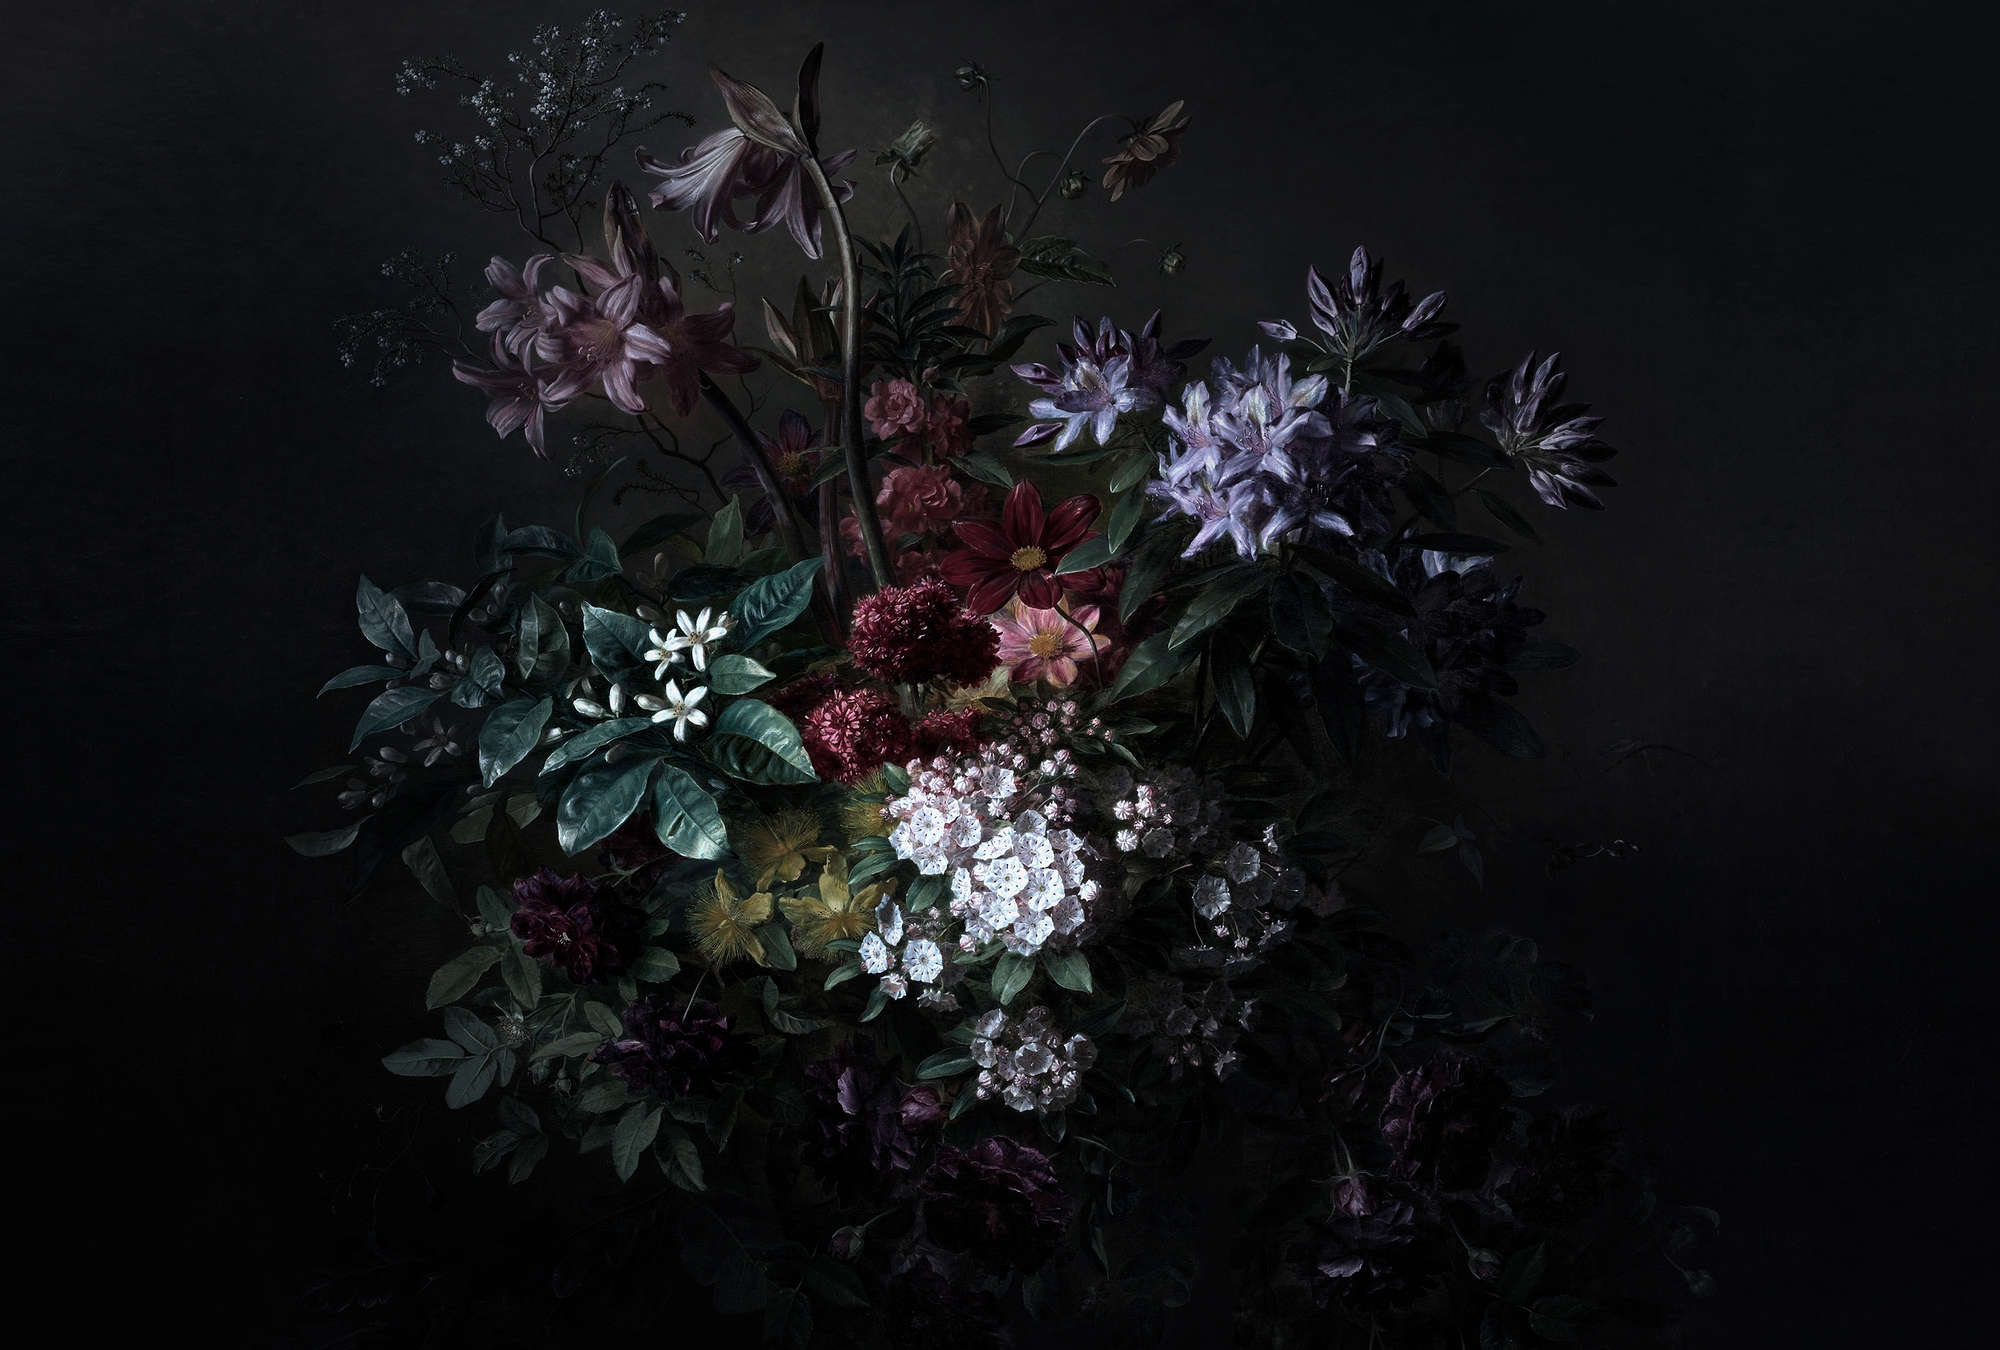             Carta da parati fiori rose natura morta - Walls by Patel
        